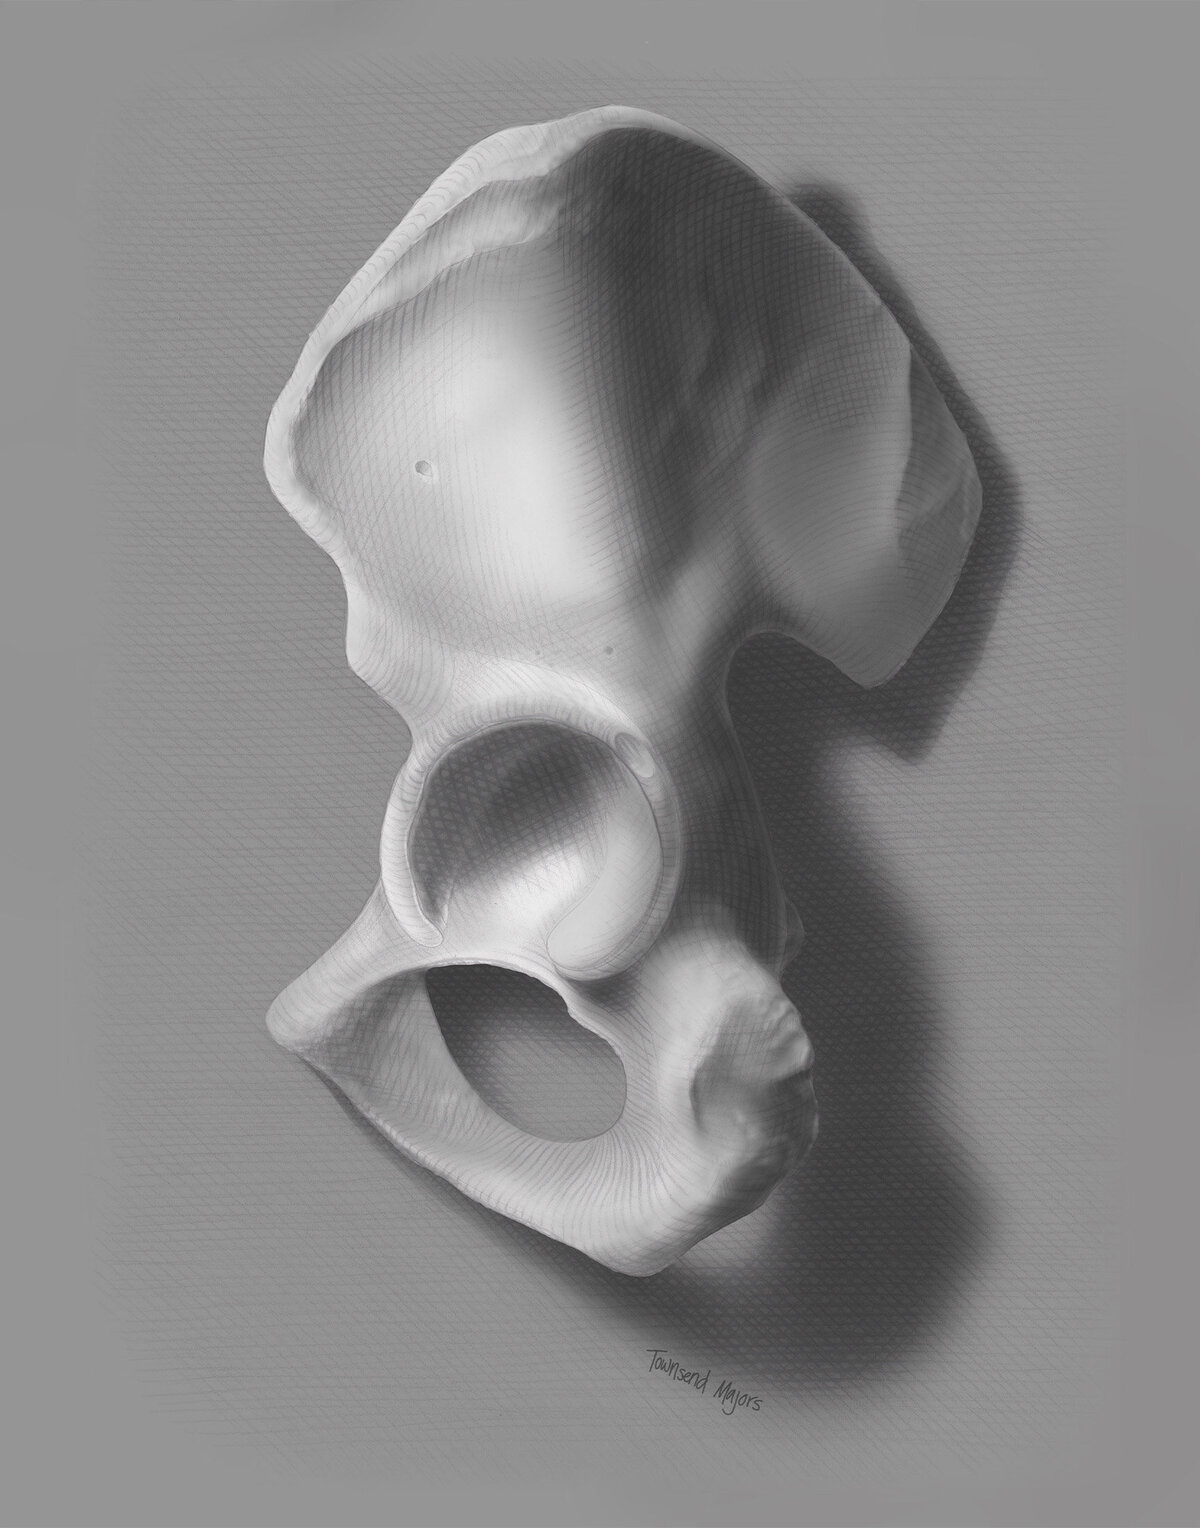 Townsend Majors' illustration of an os coxae hip bone